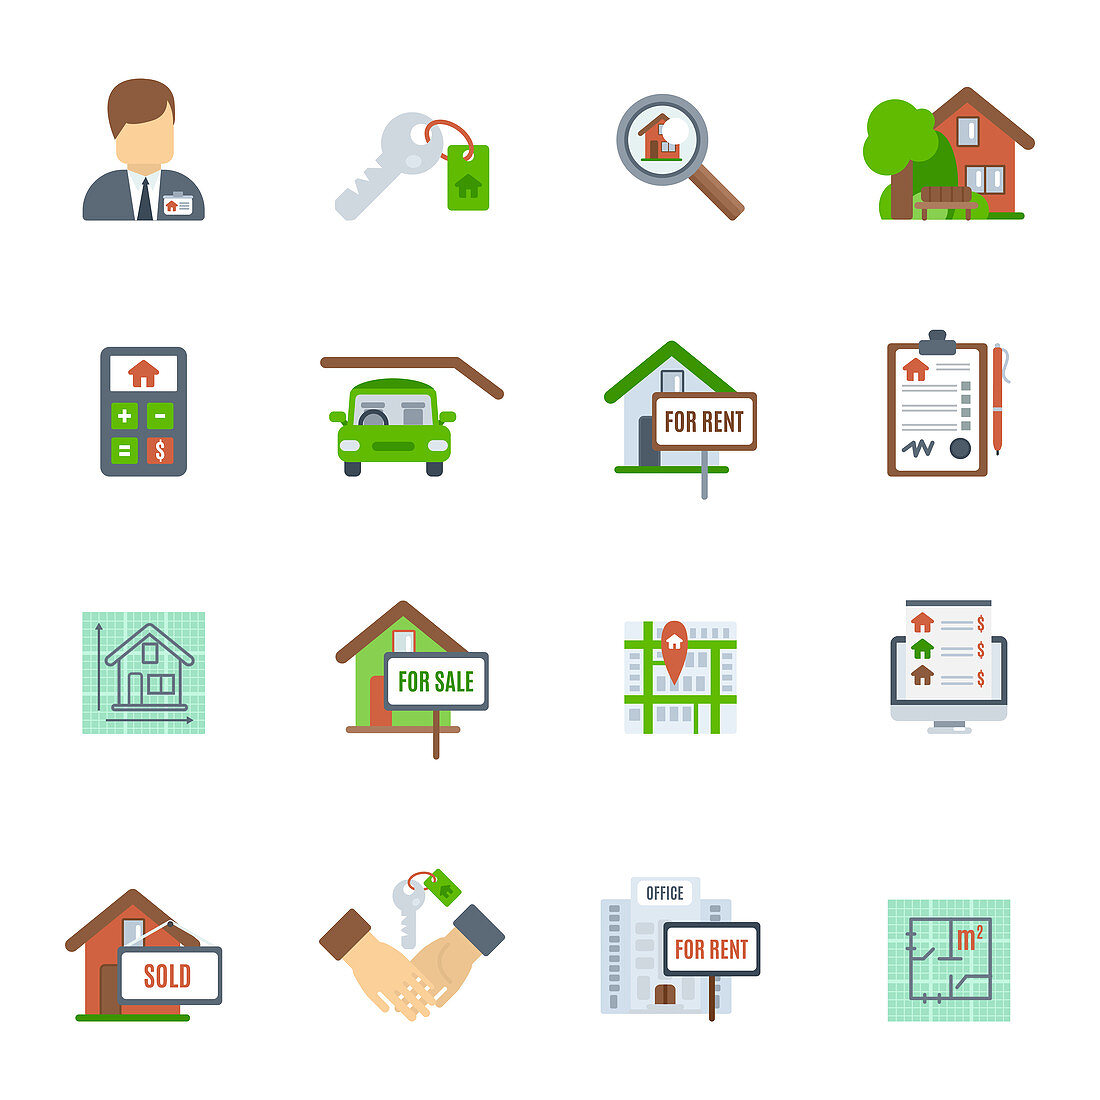 Real estate icons, illustration